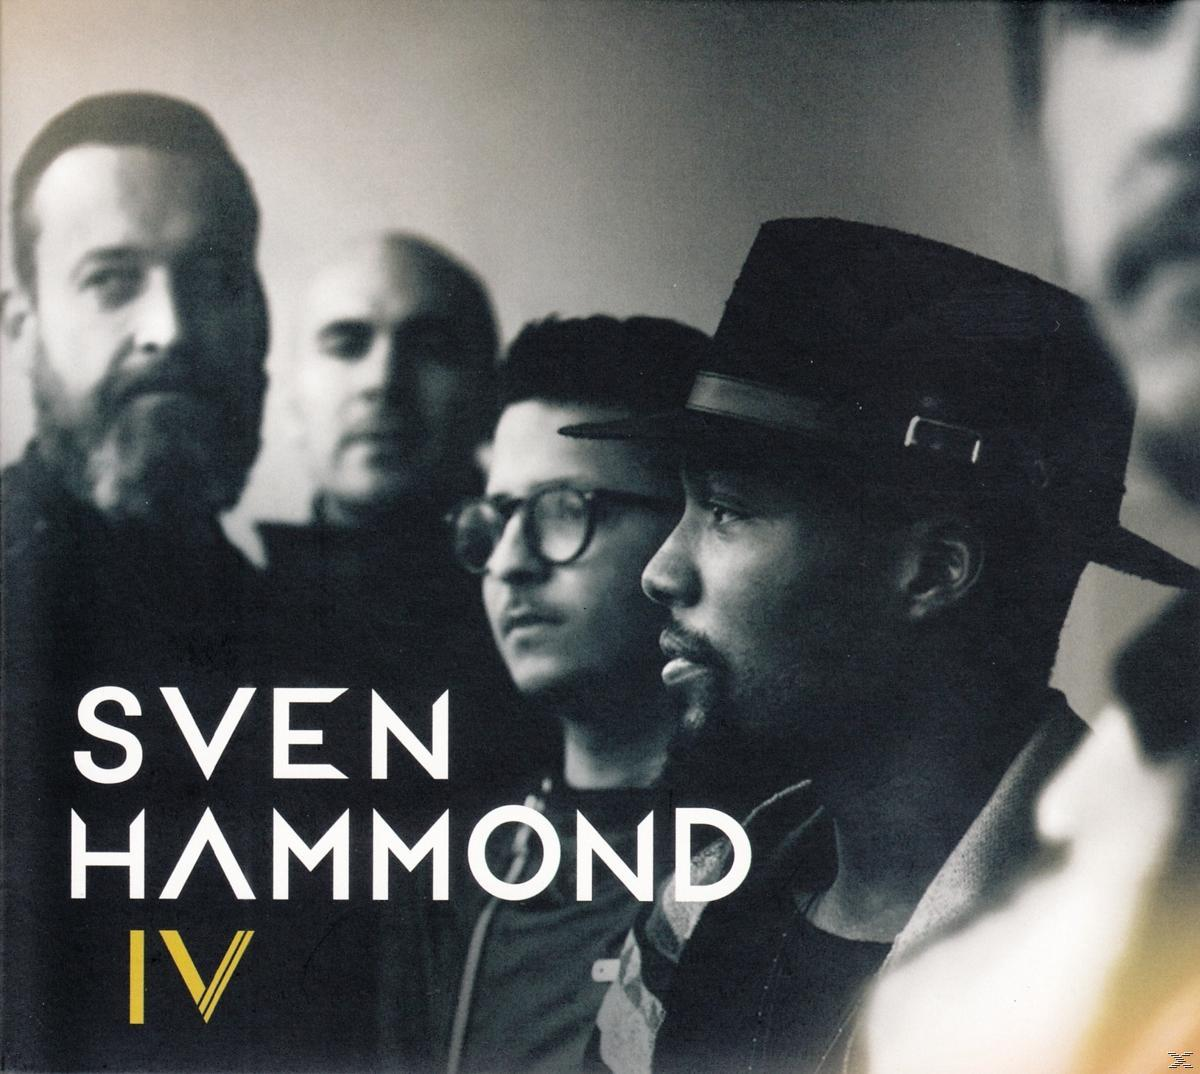 Sven - - IV (CD) Hammond